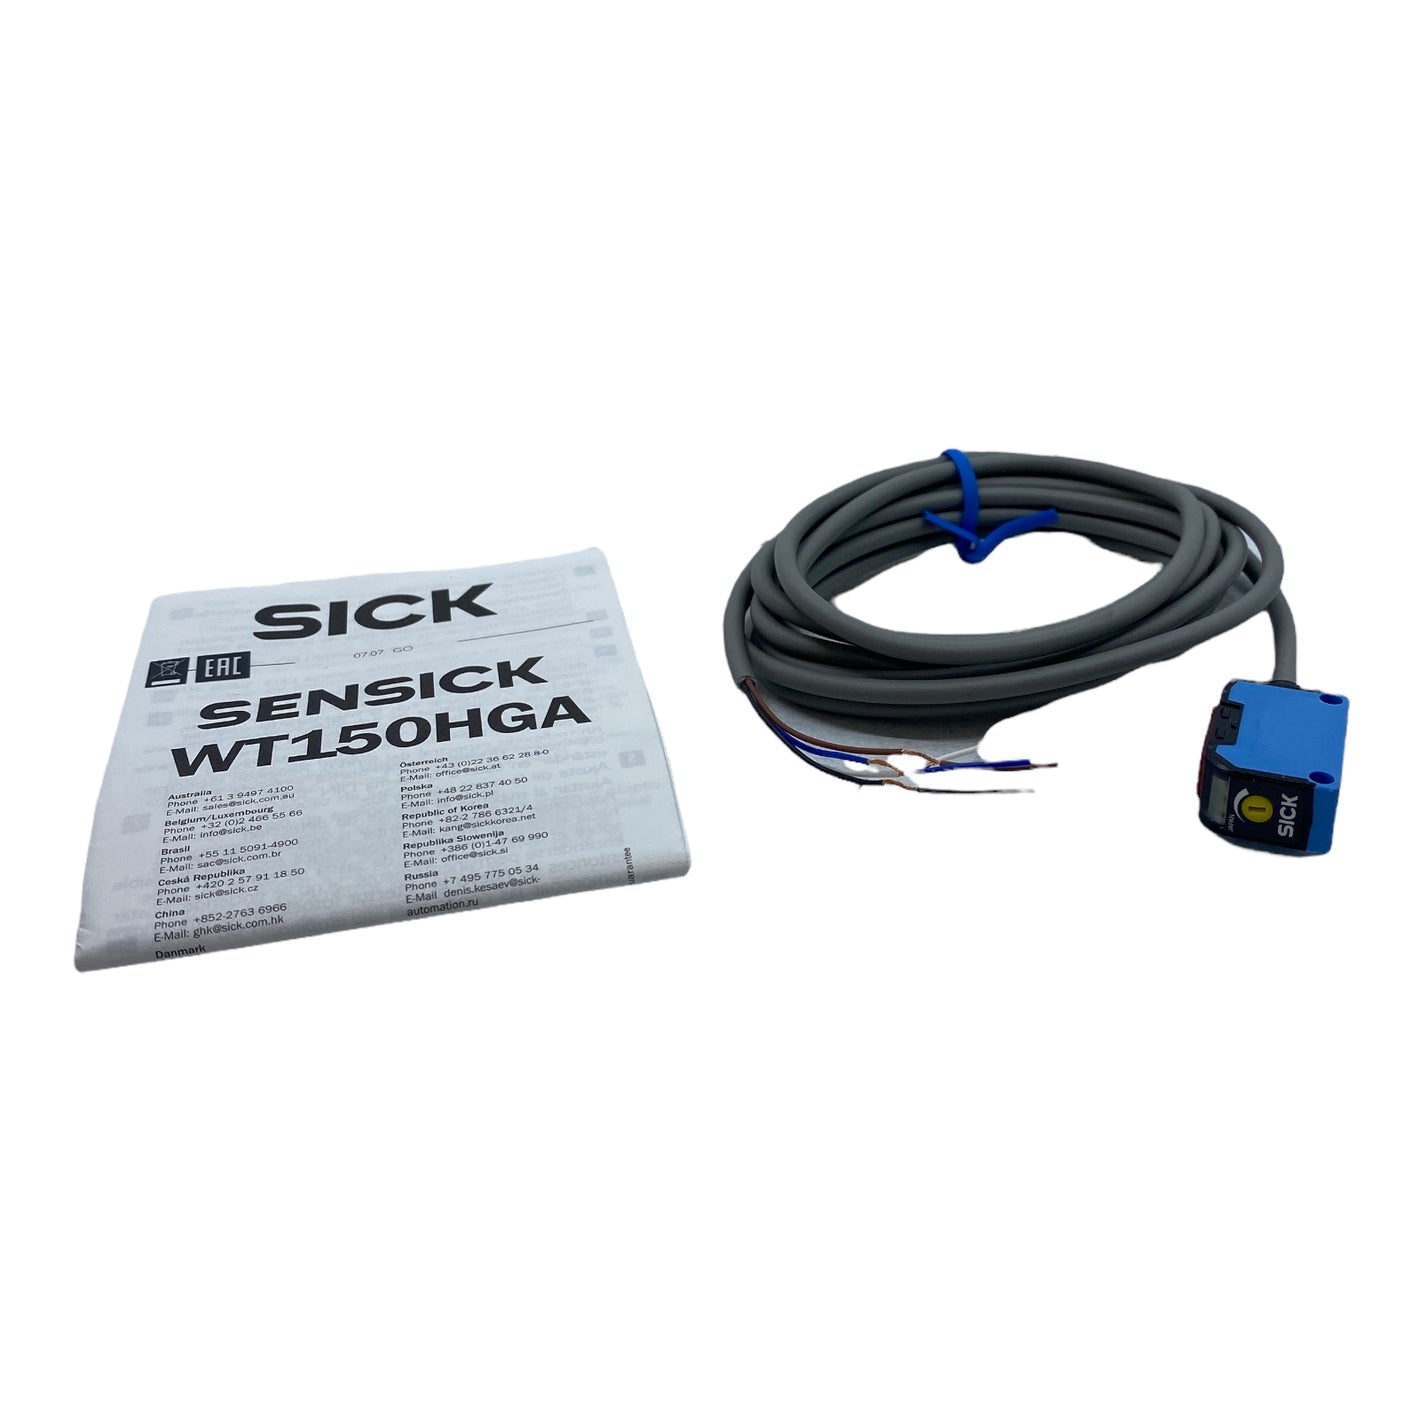 Sick WT150-P162 Optical Sensor IP67 